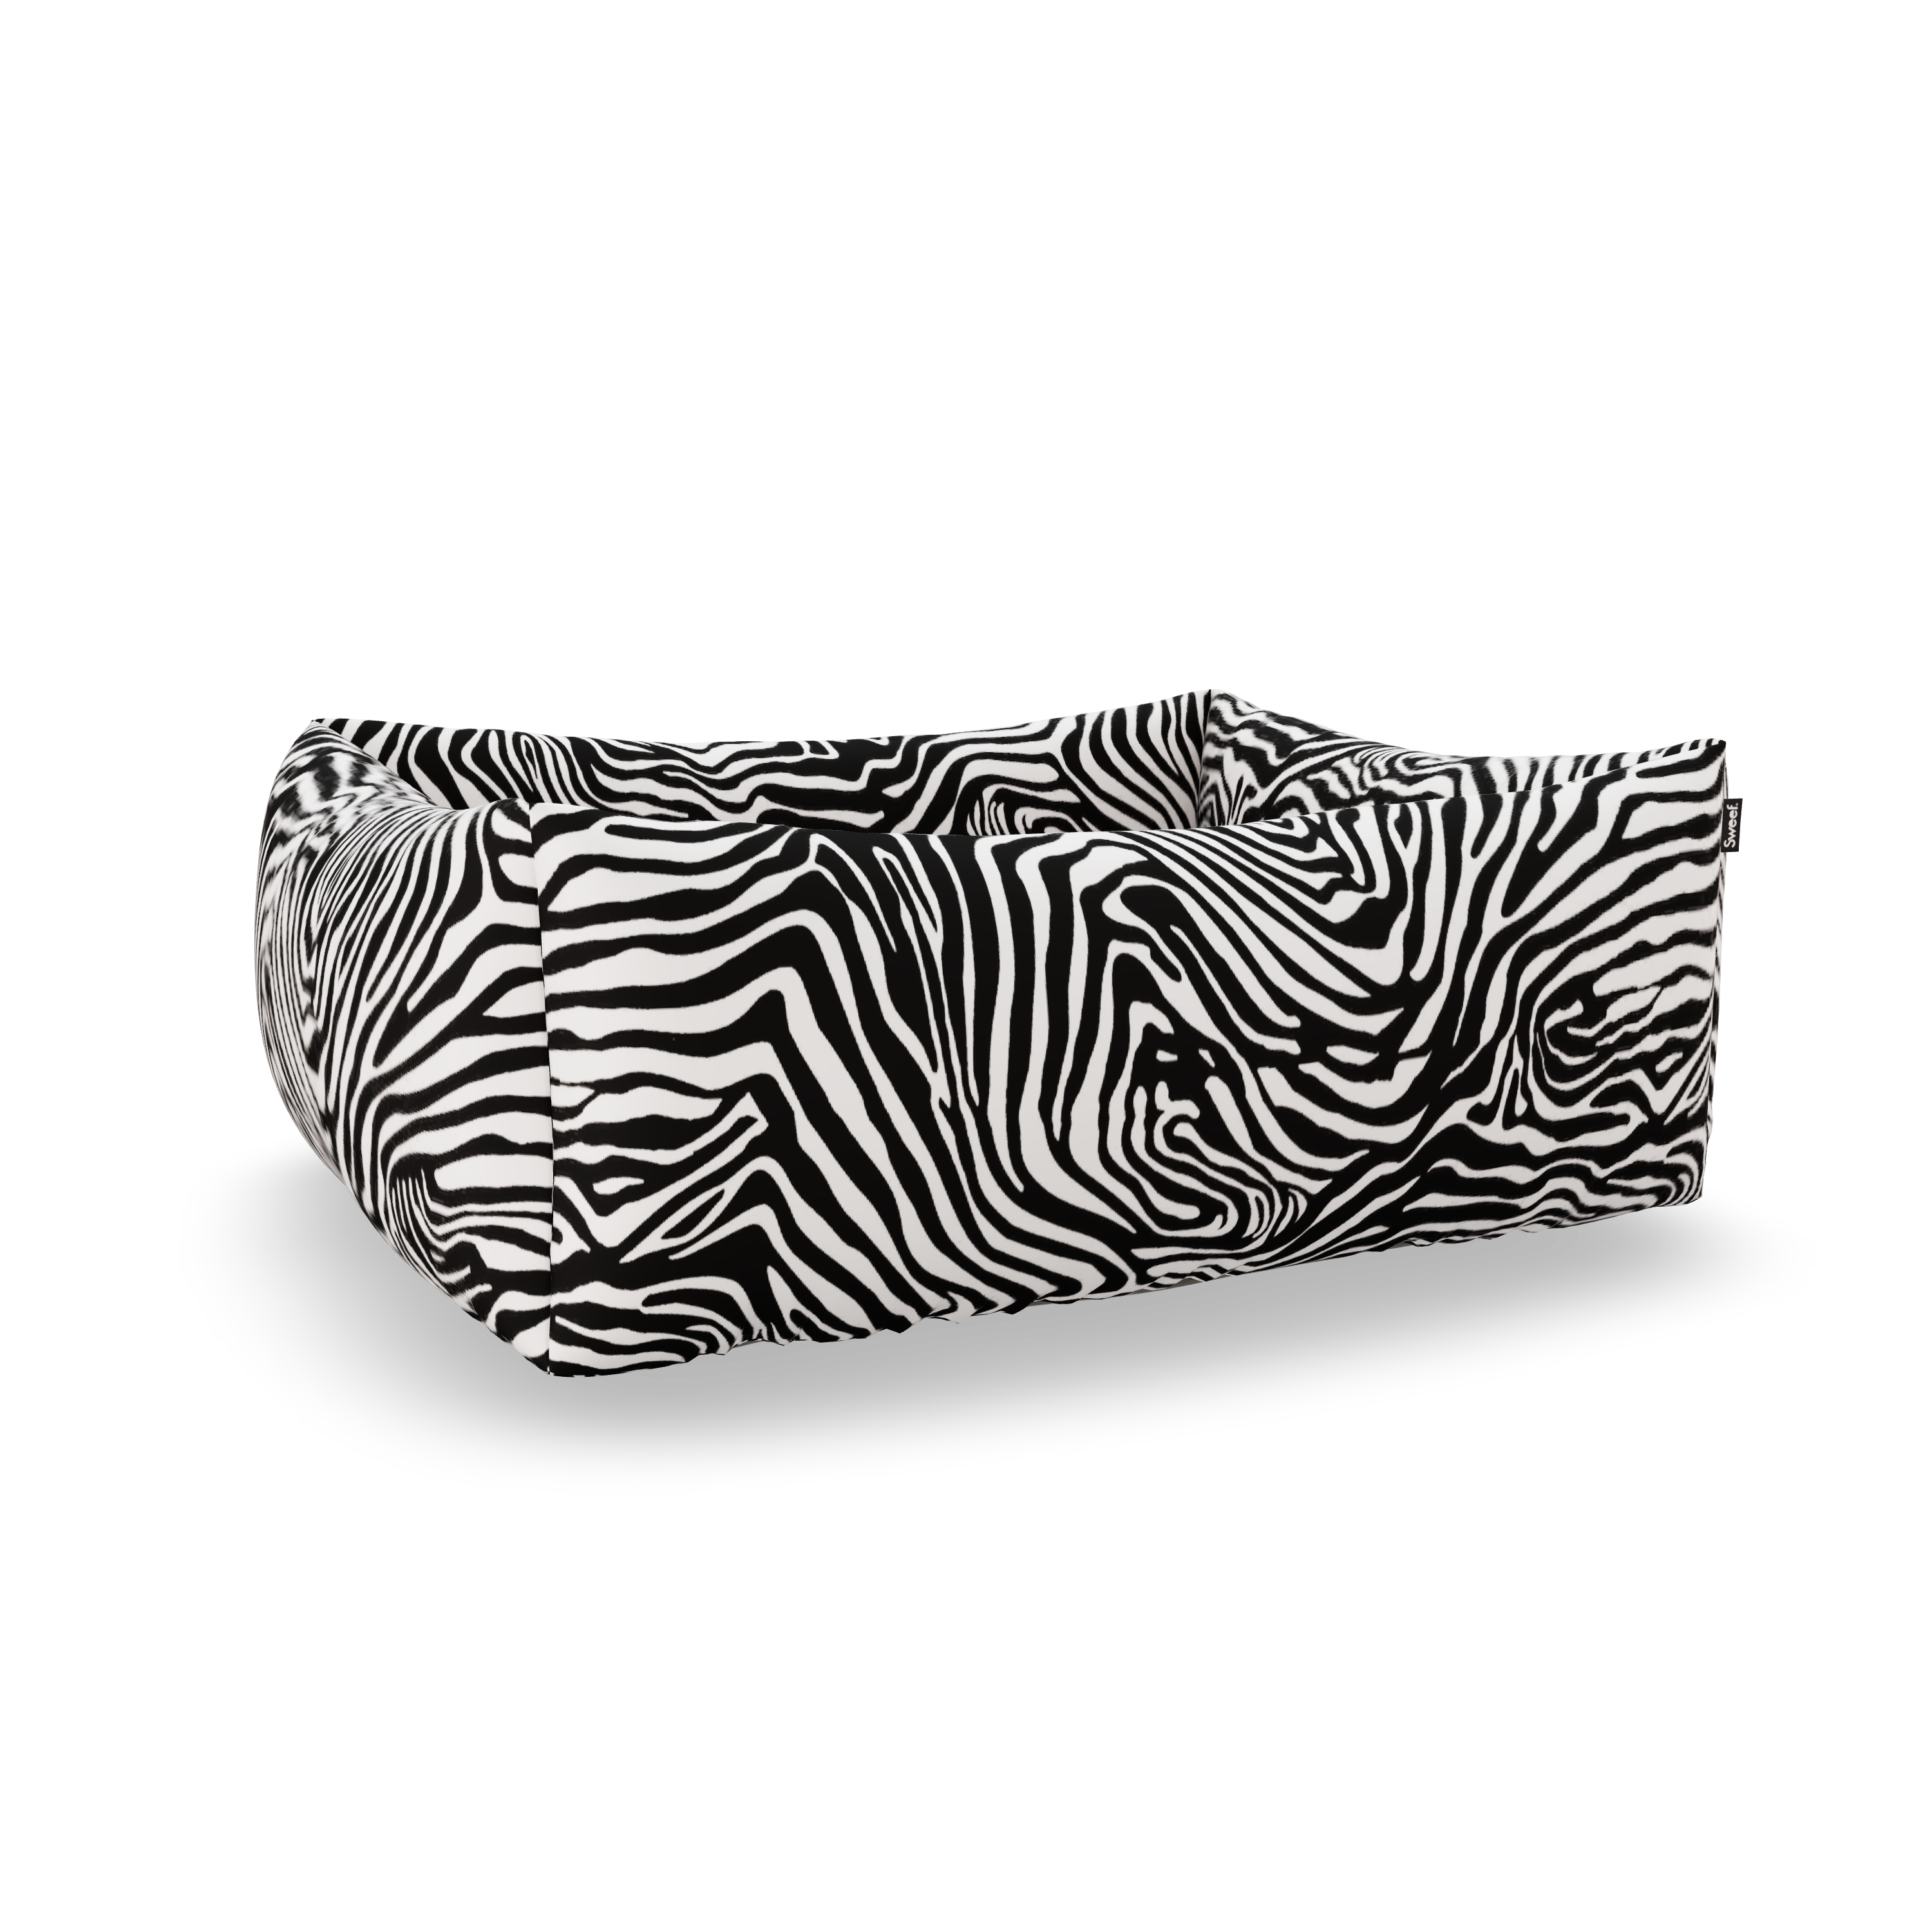 60x70 Sweef print - Zebra